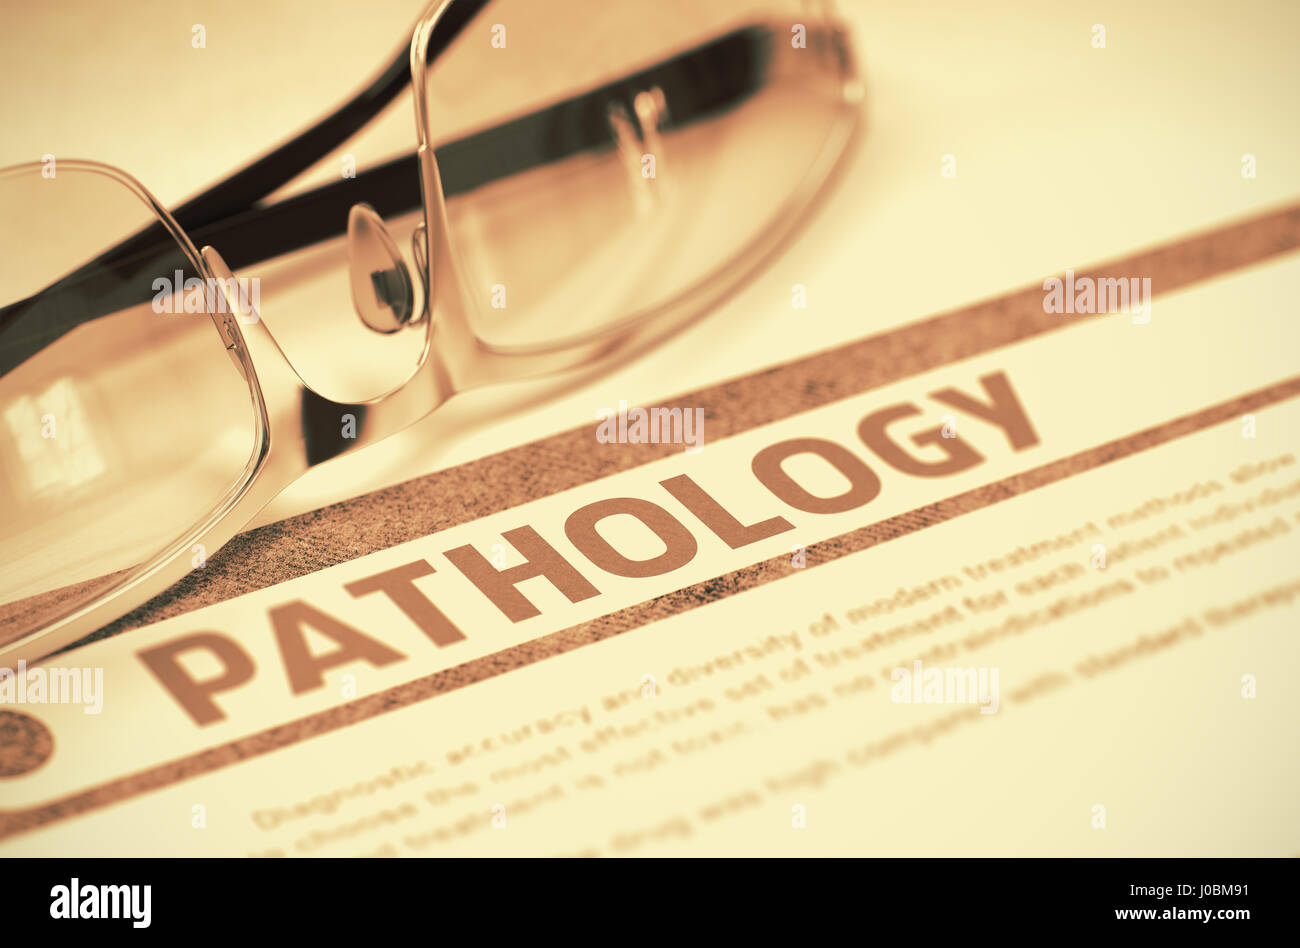 Diagnosis - Pathology. Medical Concept. 3D Illustration. Stock Photo